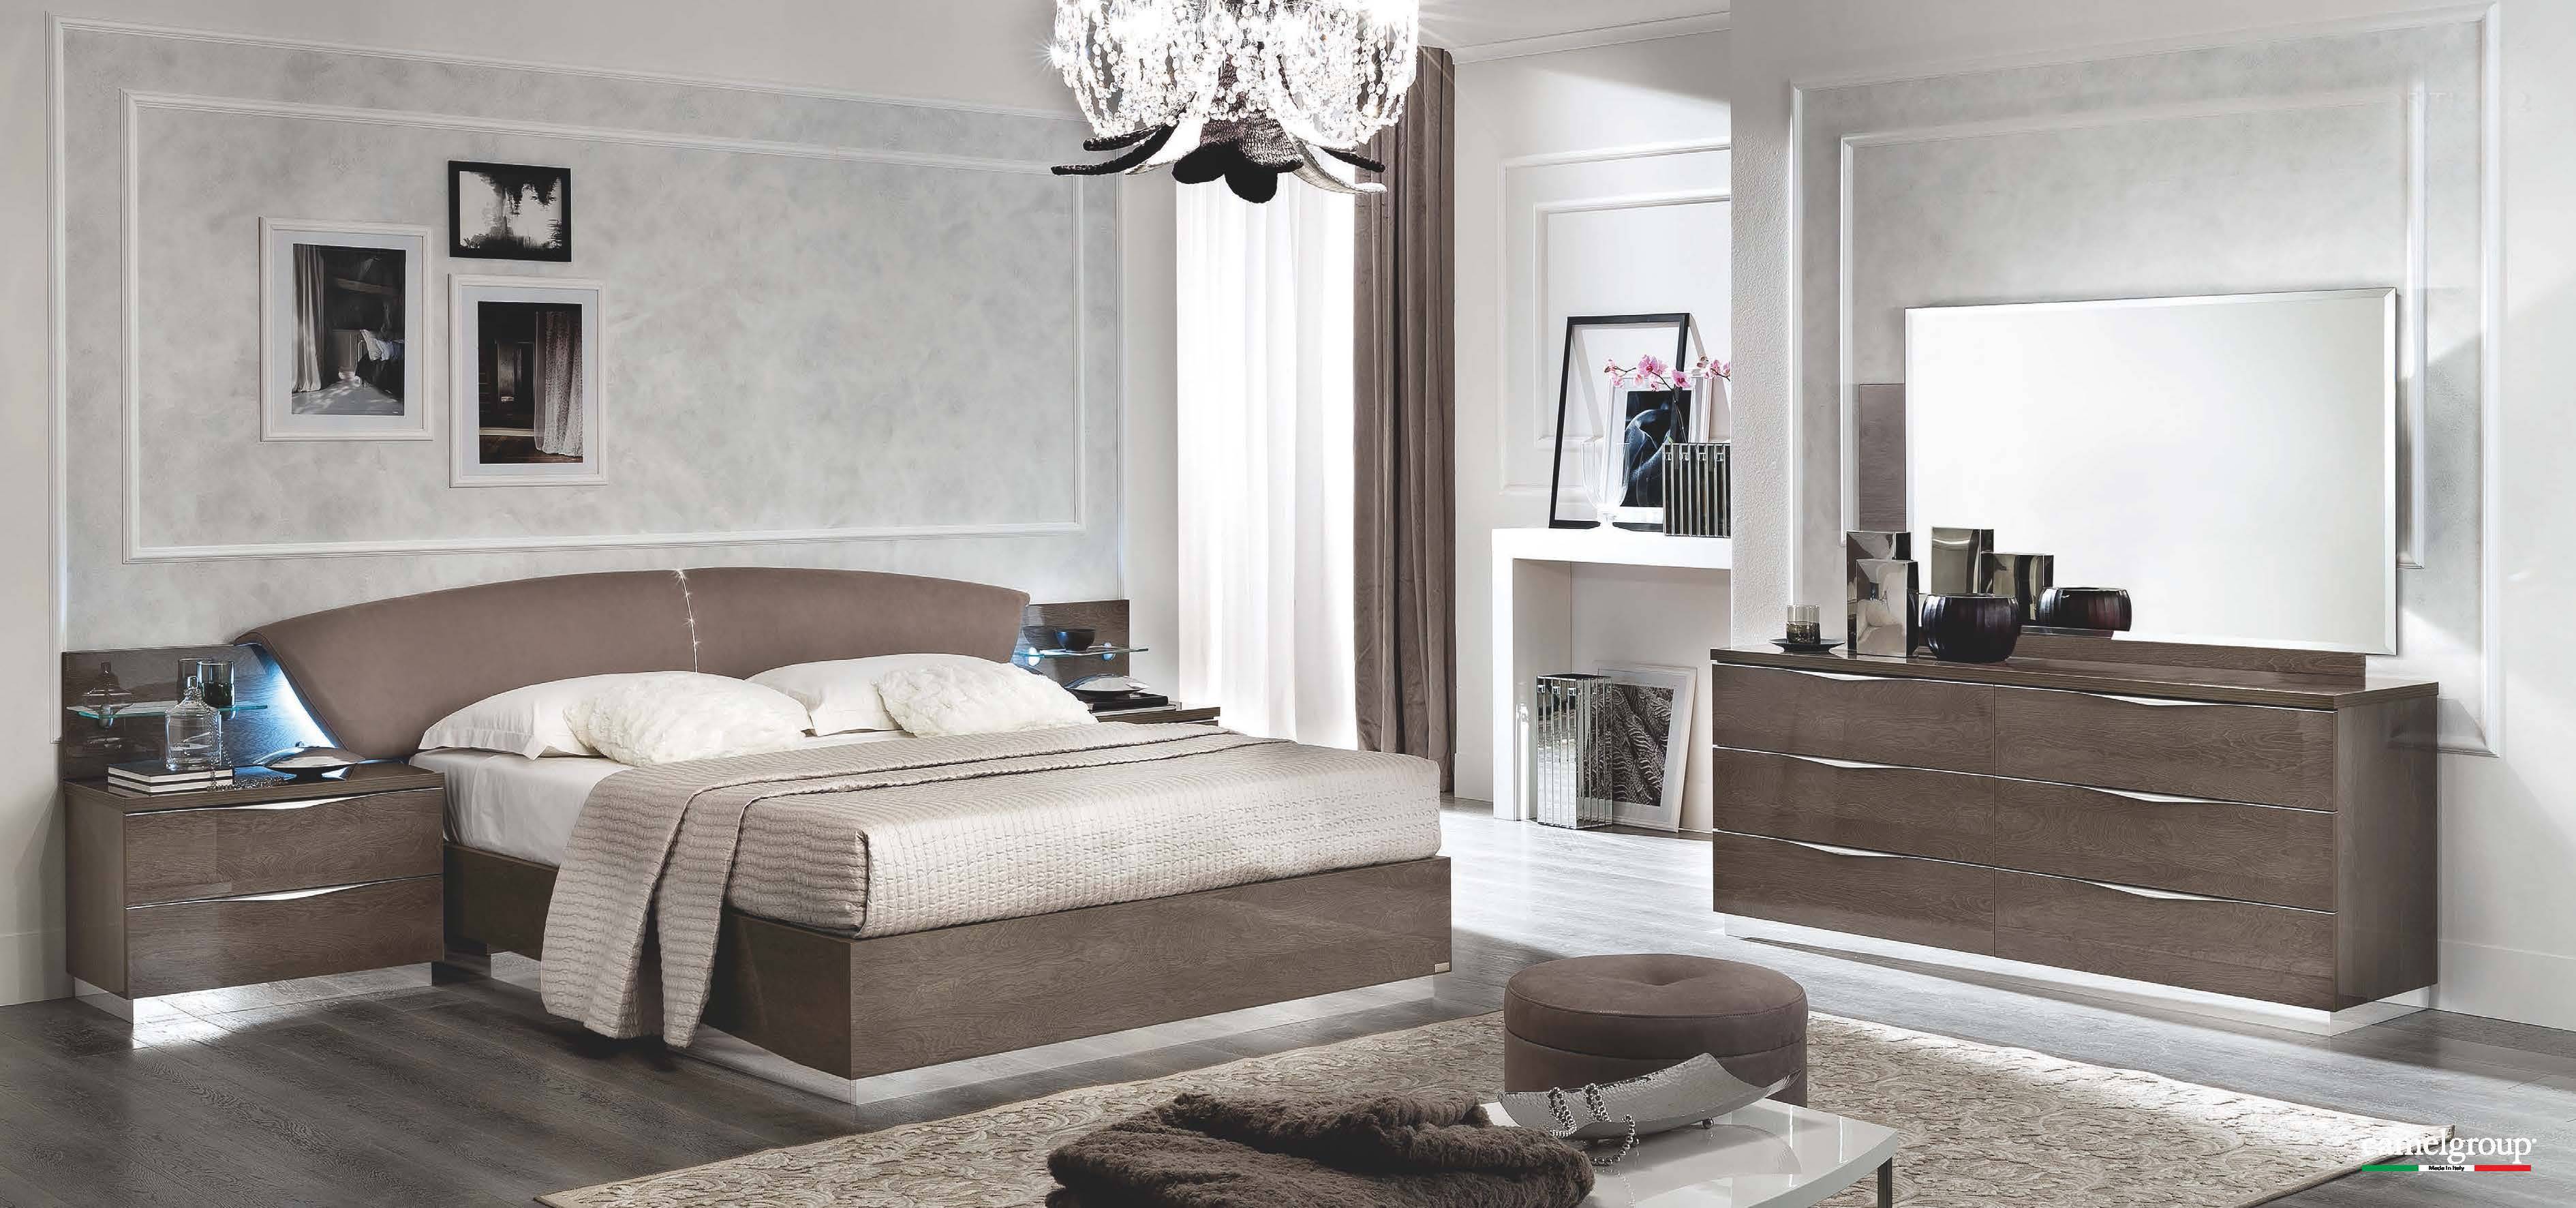 designer italian bedroom furniture